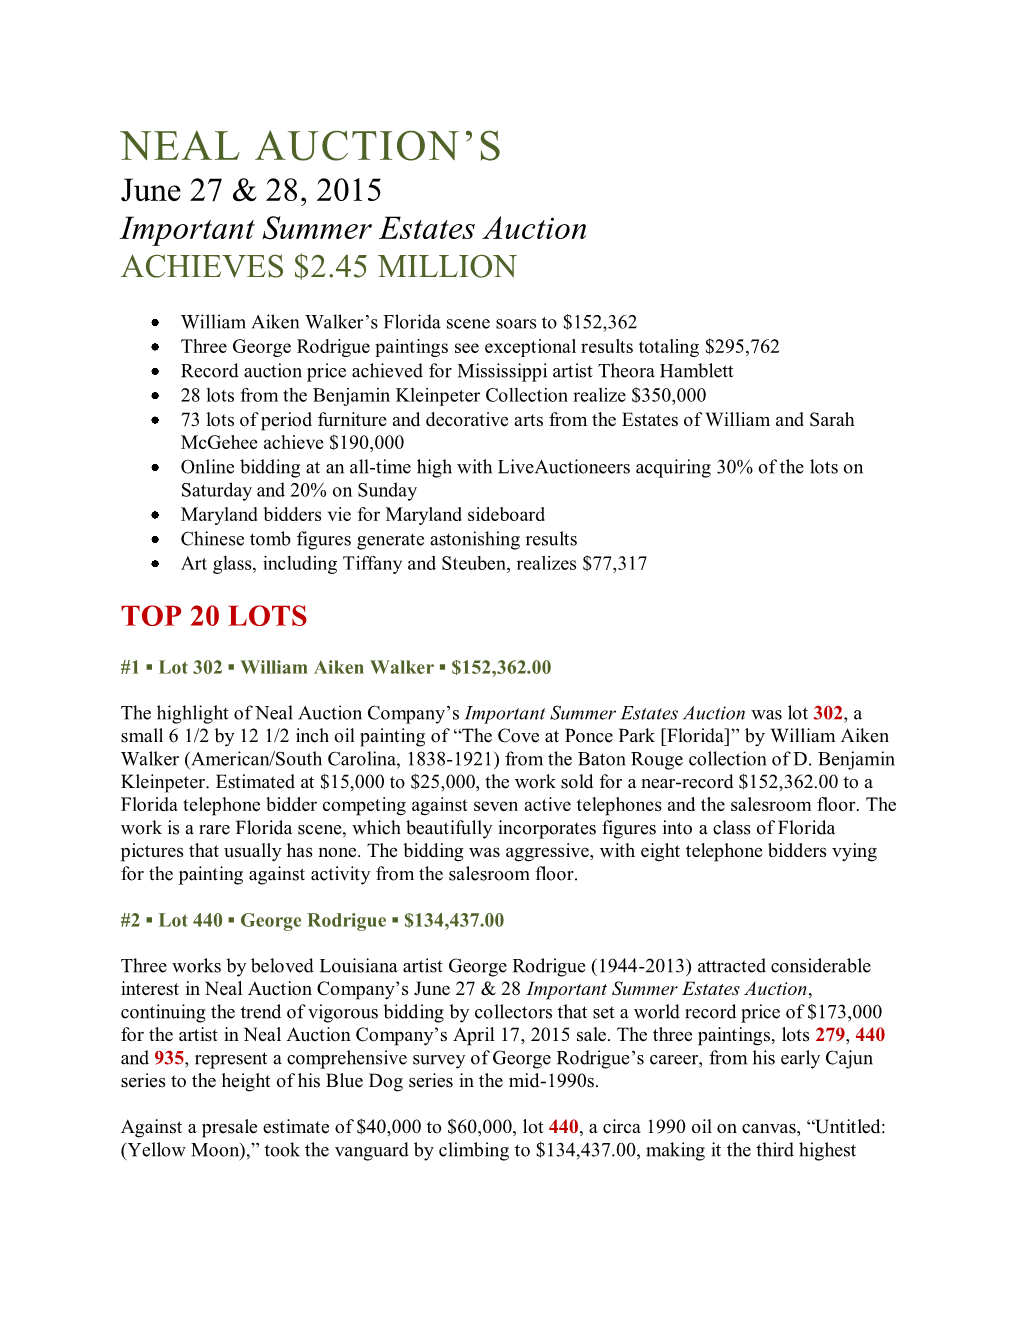 NEAL AUCTION's June 27 & 28, 2015 Important